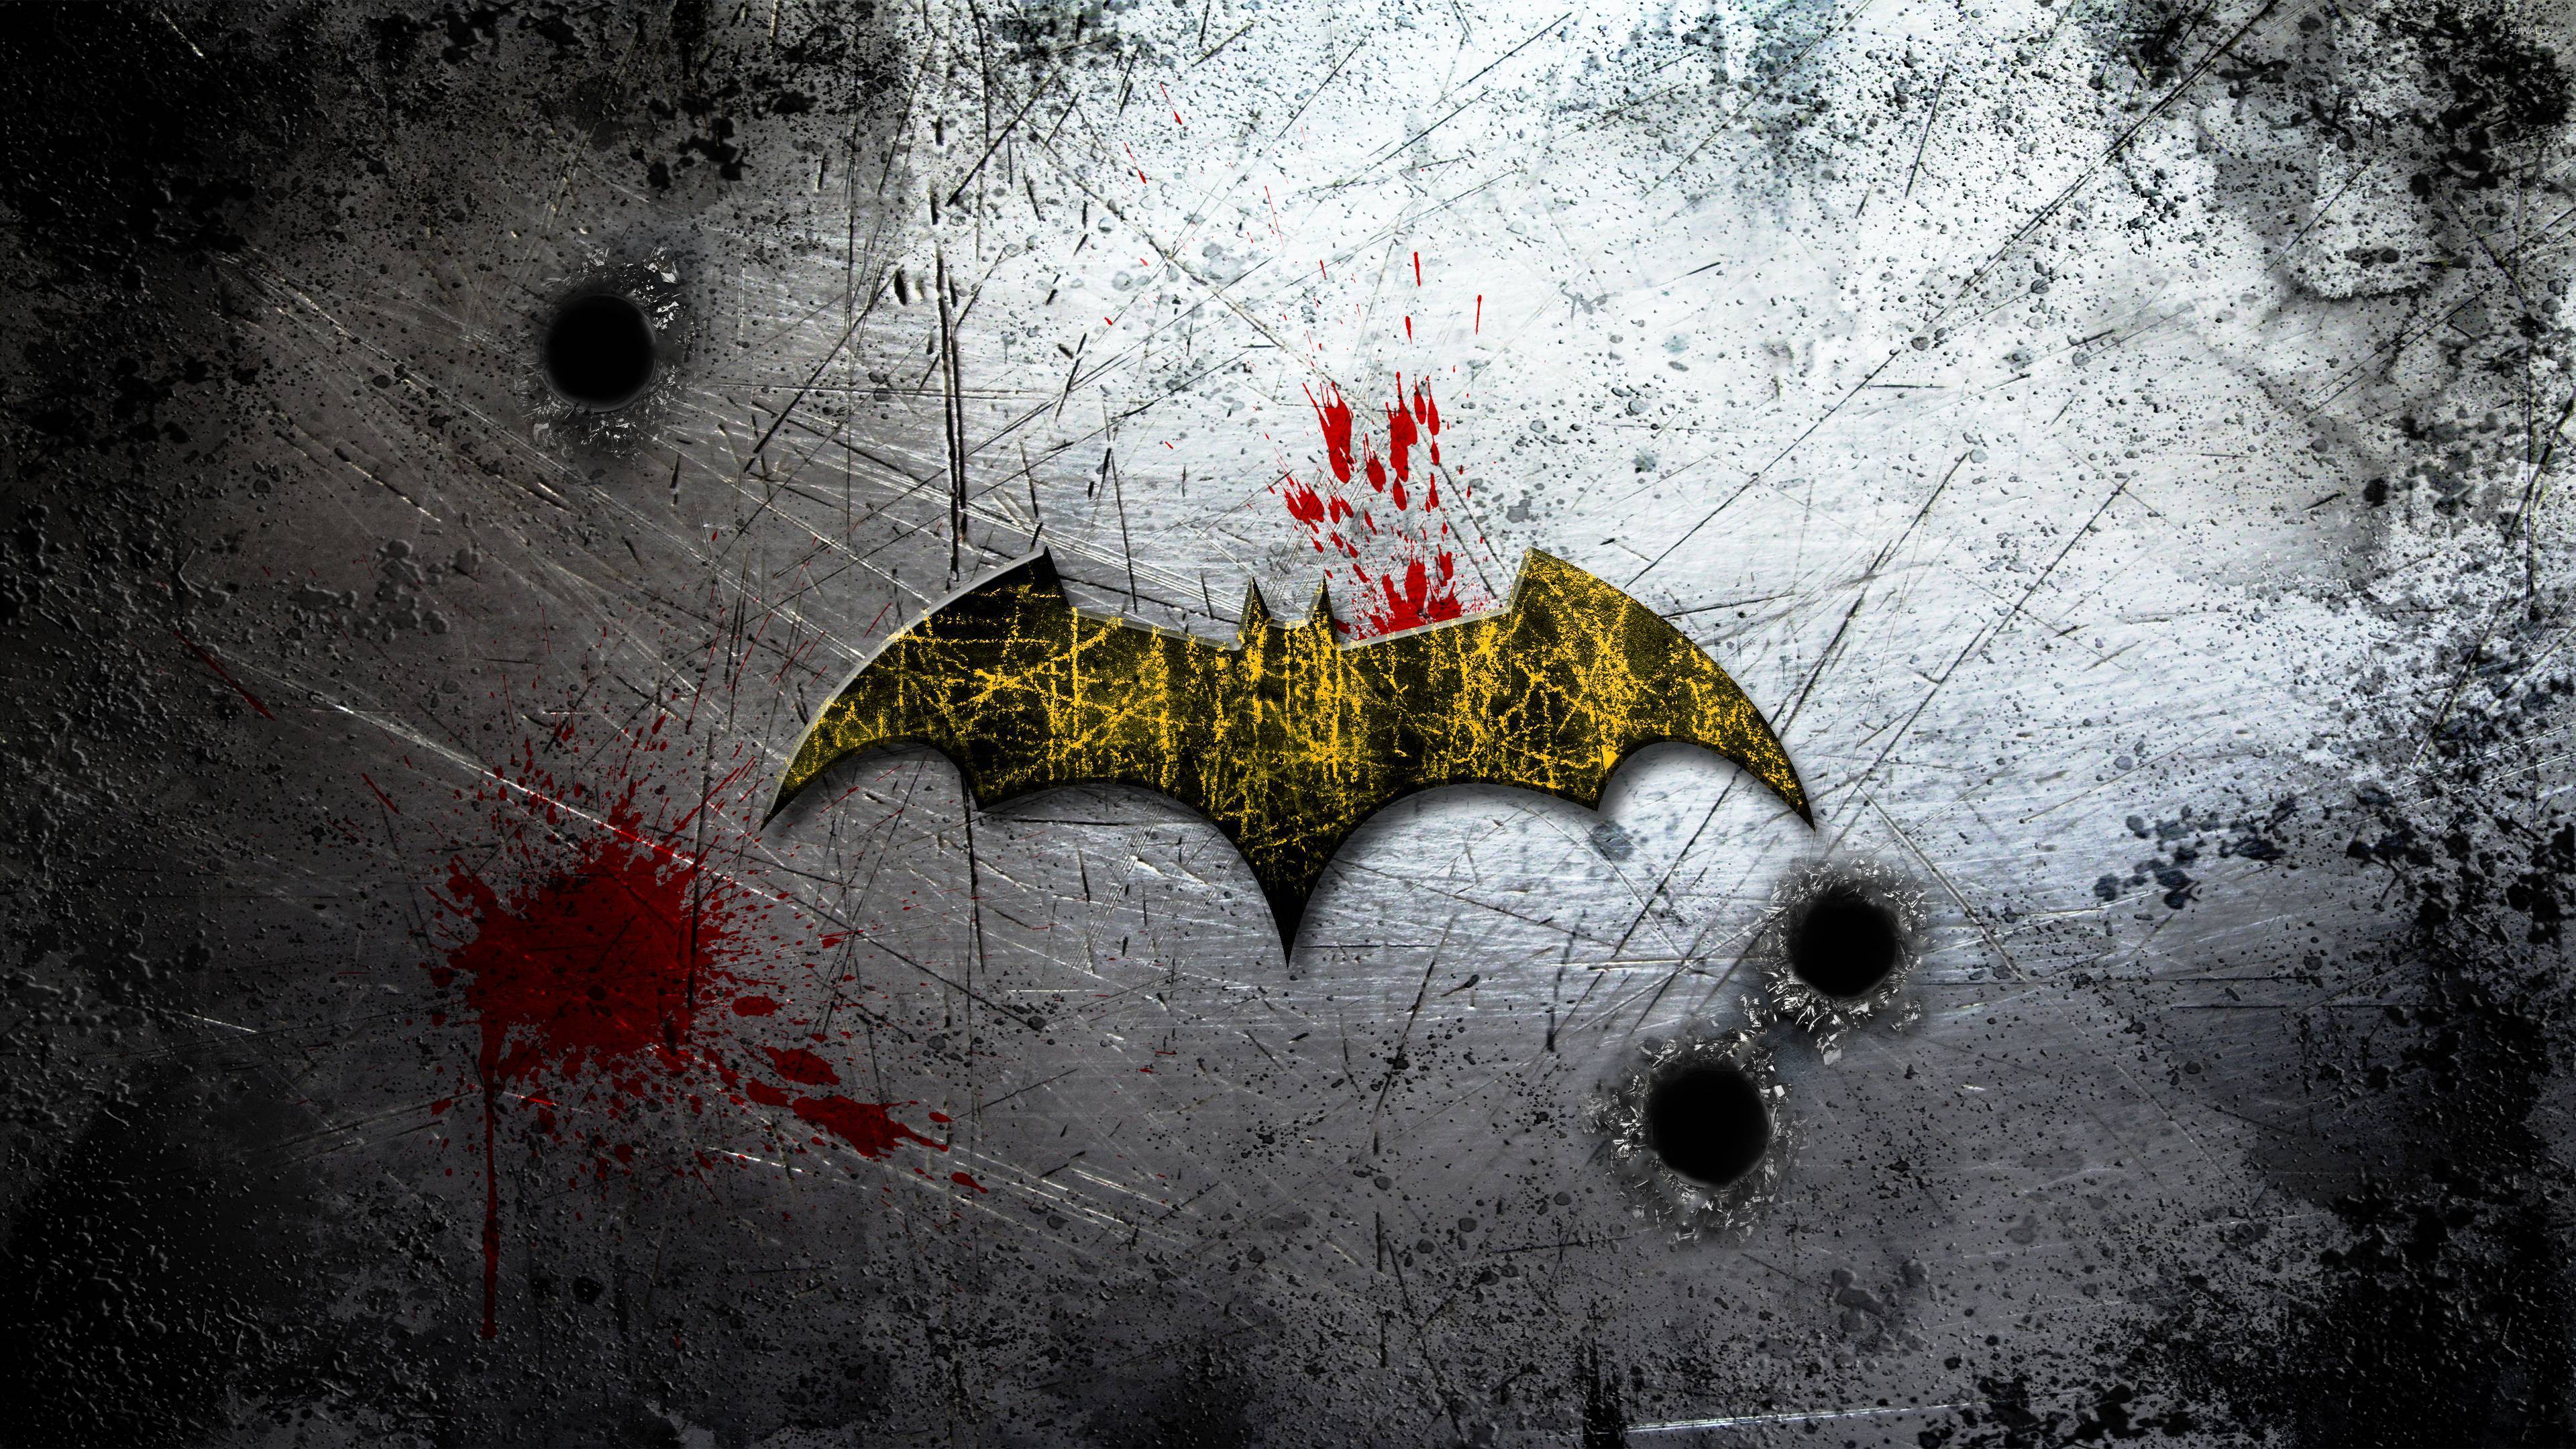 Batman Logo Wallpaper  Batman the dark knight, Batman wallpaper